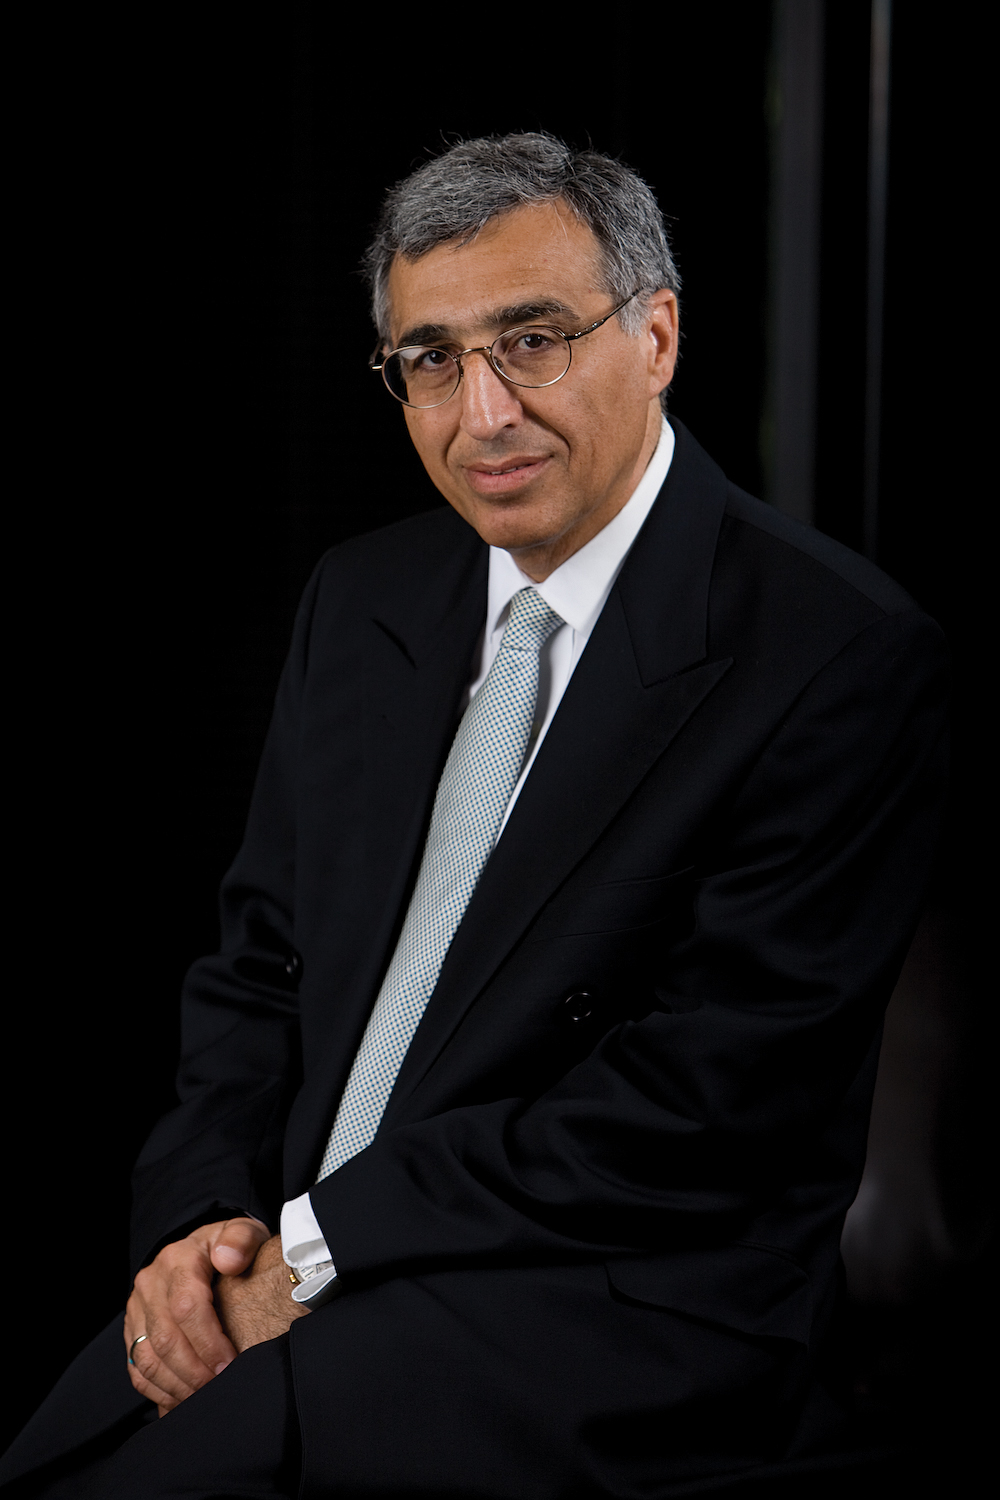 Emil Youssefzadeh